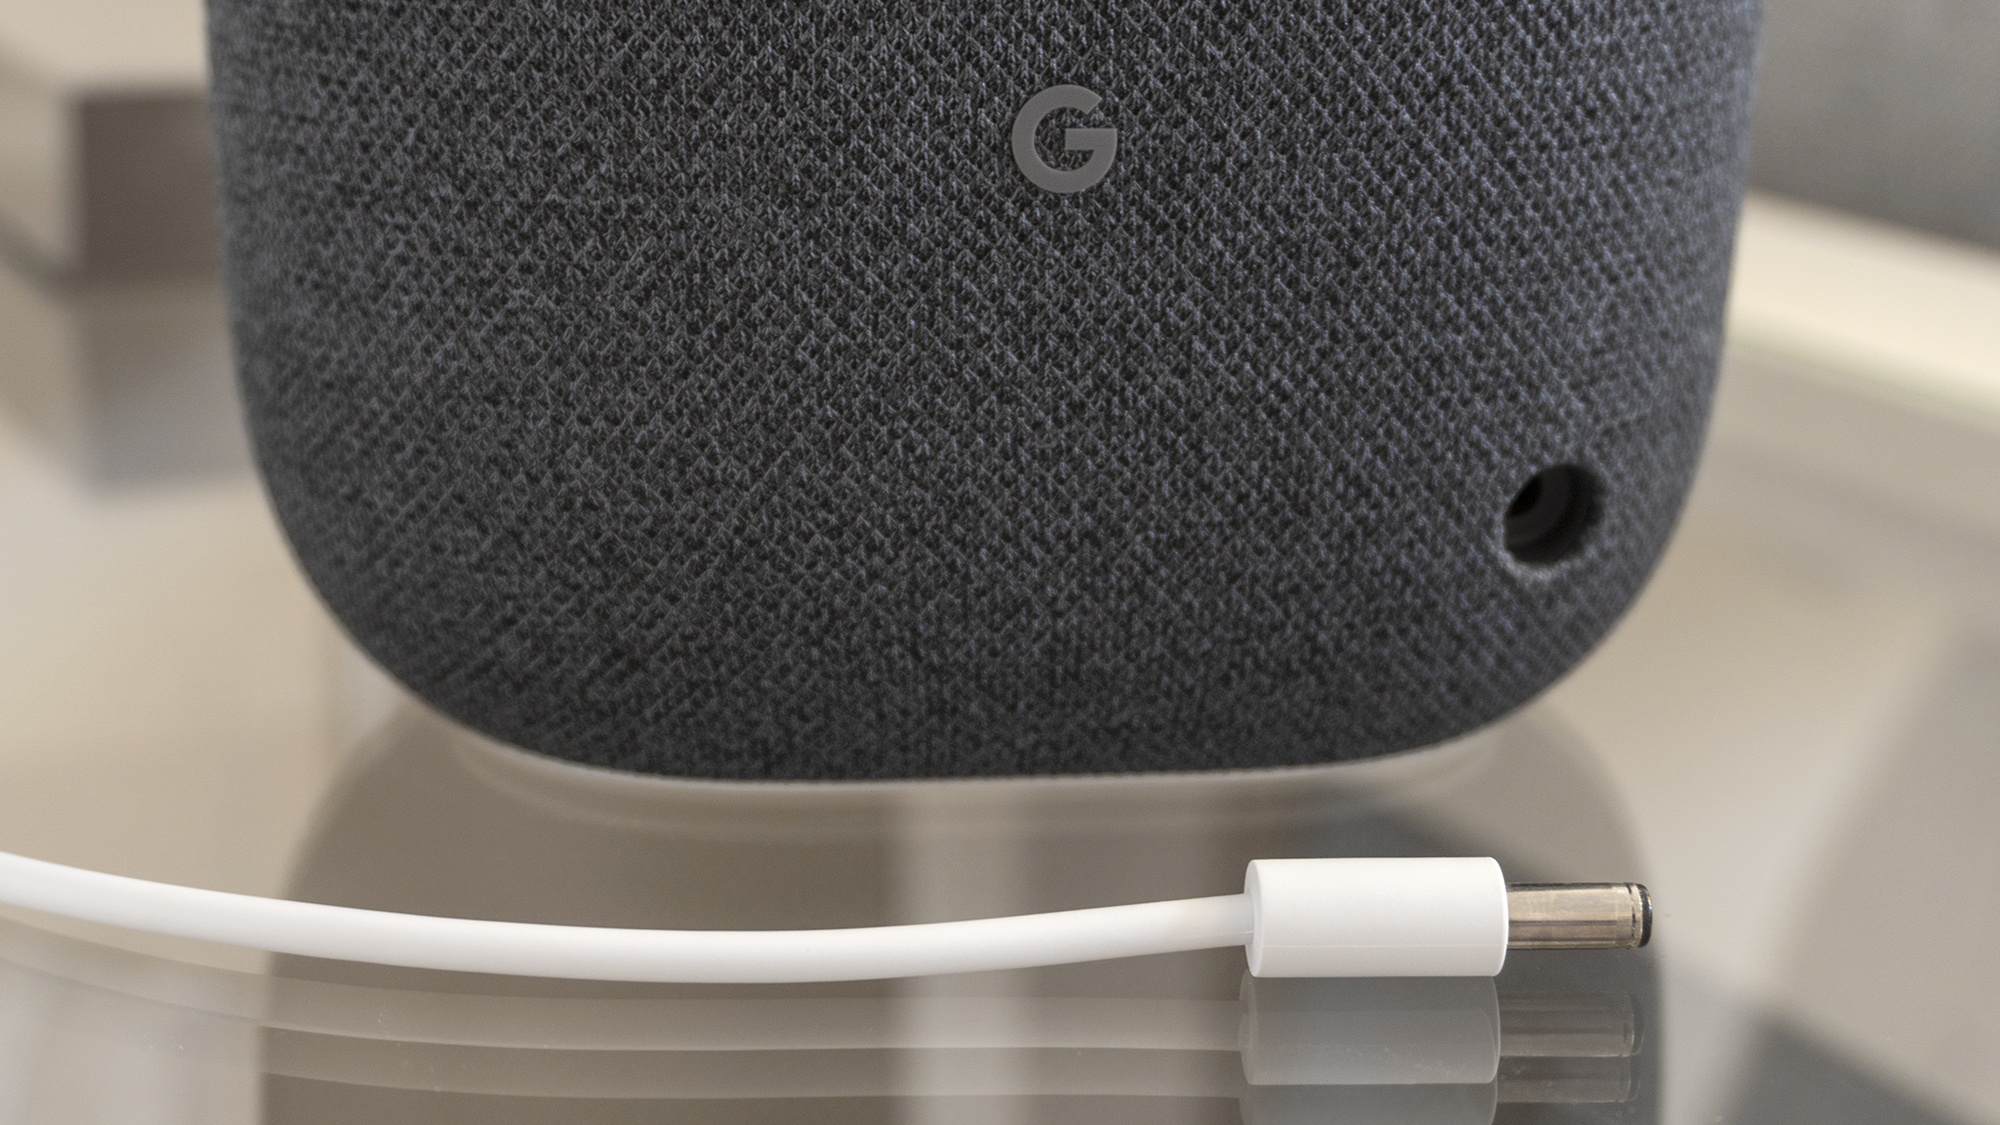 Proprietary power adapters are never a win, but the Google Nest Audio is power-hungry. (Photo: Andrew Liszewski - Gizmodo)